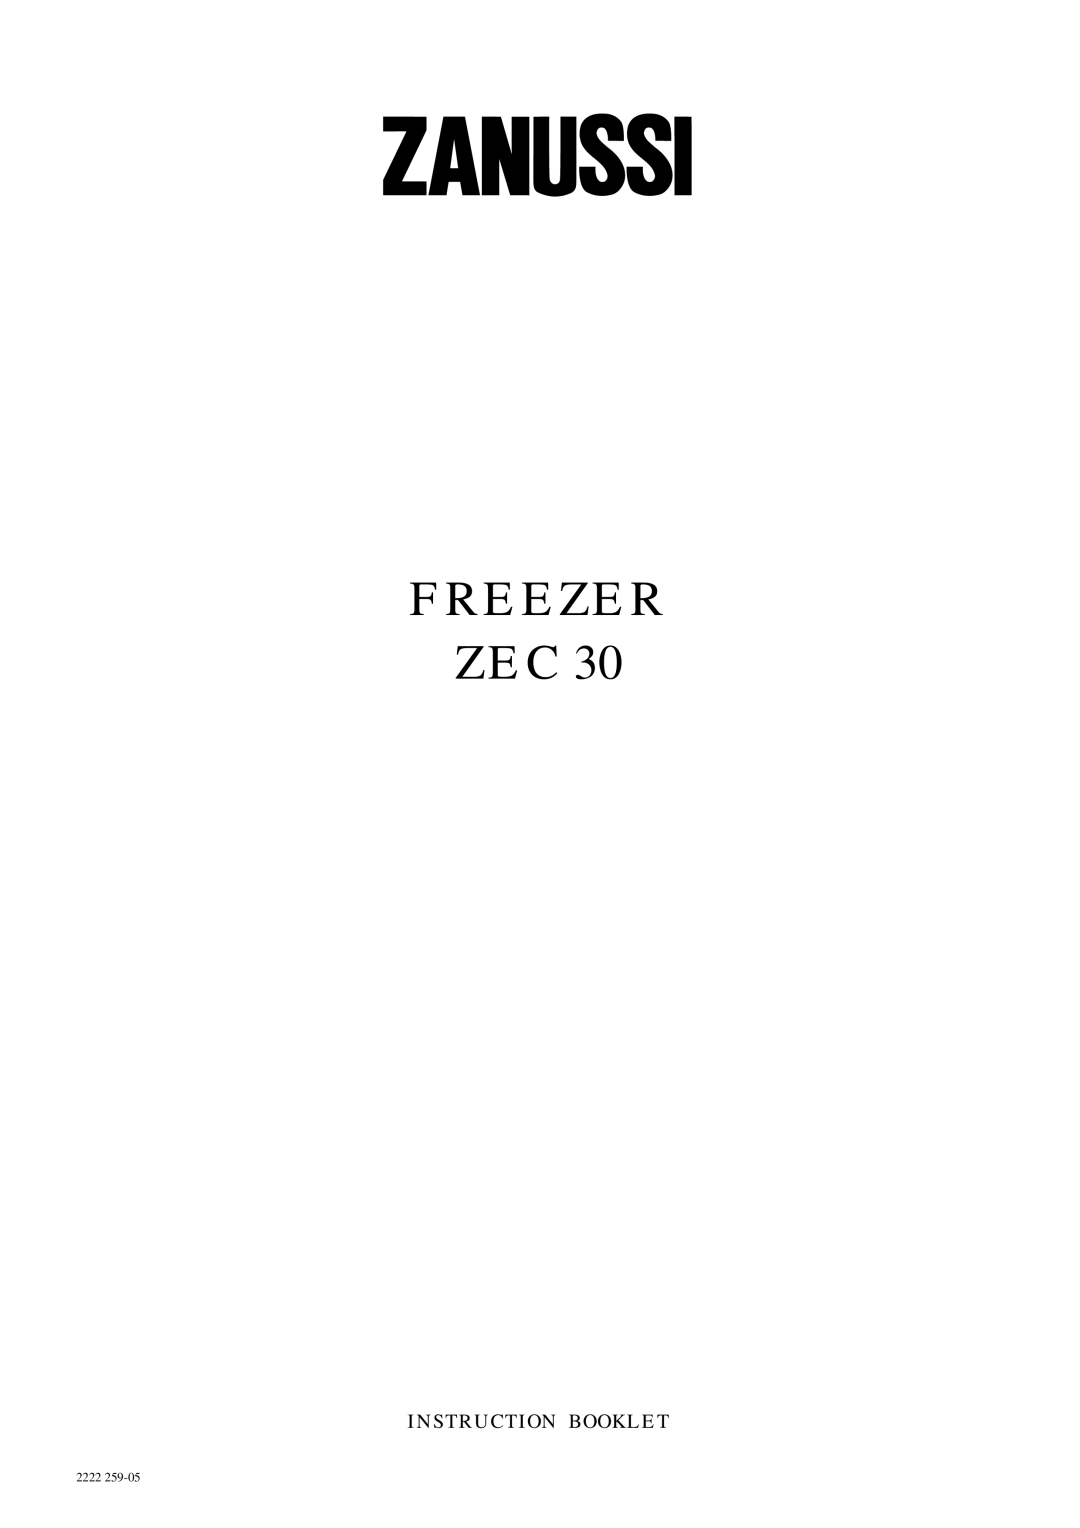 Zanussi ZEC 30 manual Freezer Zec, Instruction Booklet, 2222 